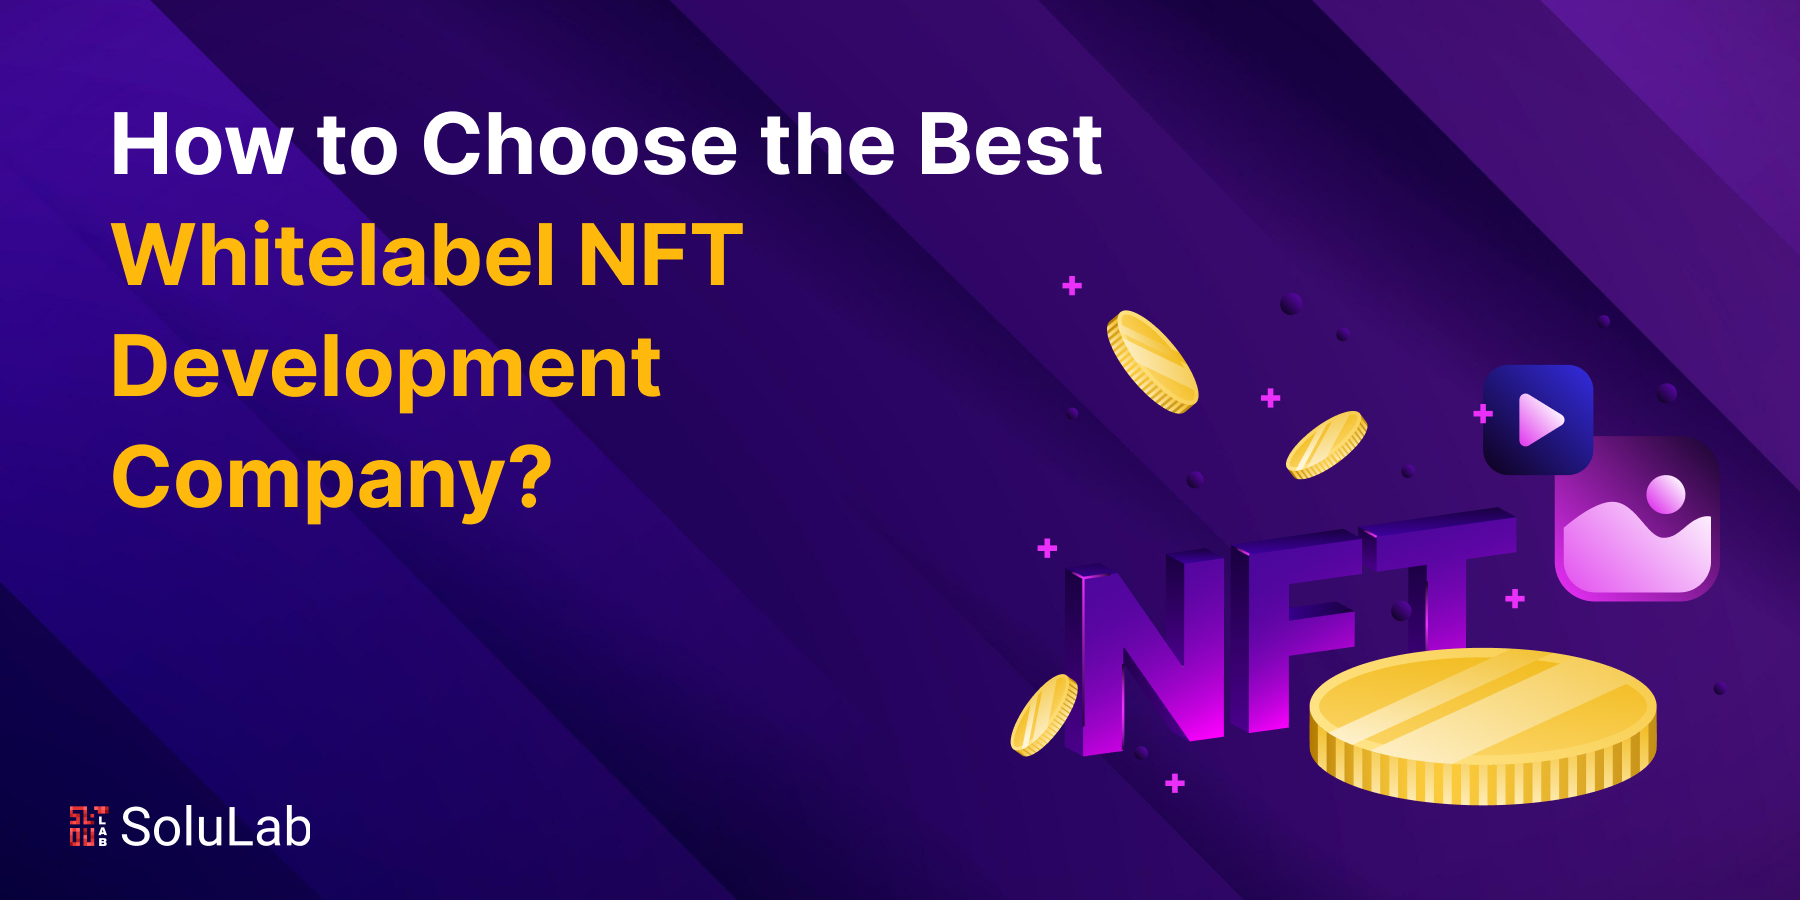 How to Choose the Best Whitelabel NFT Development Company?